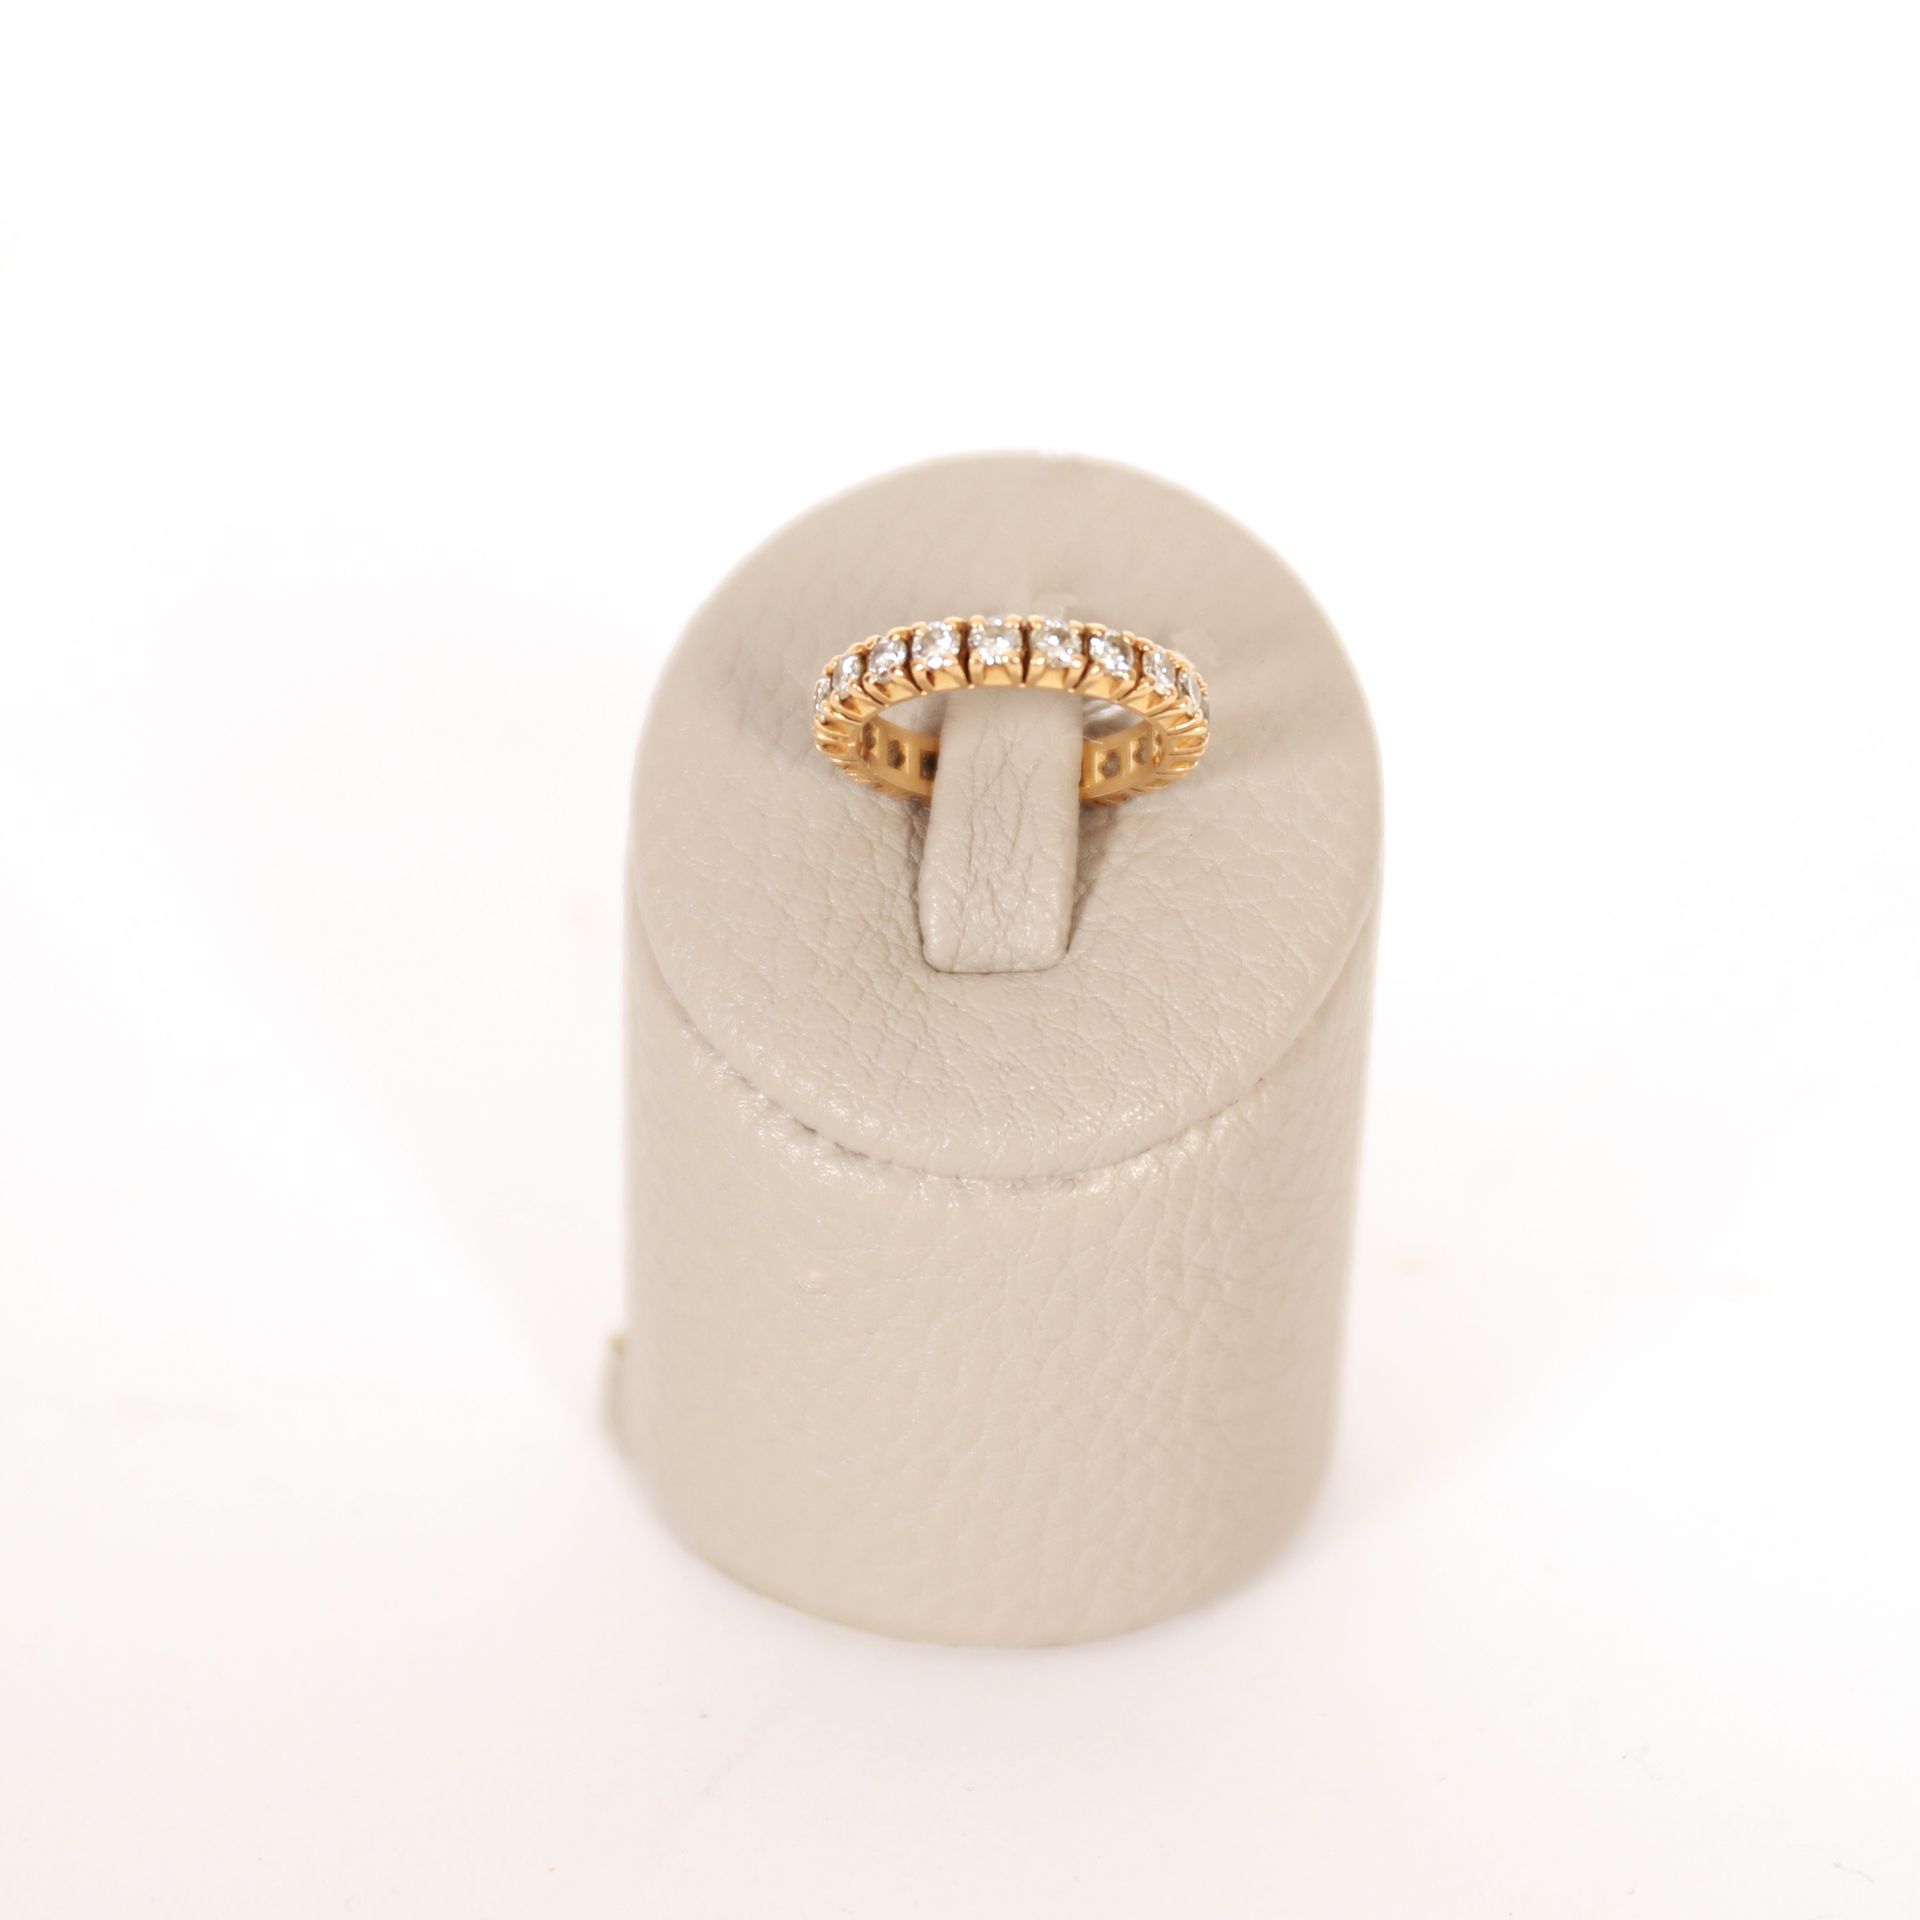 Null 镶嵌钻石的黄金结婚戒指

湿度：50

Pb : 4 grs